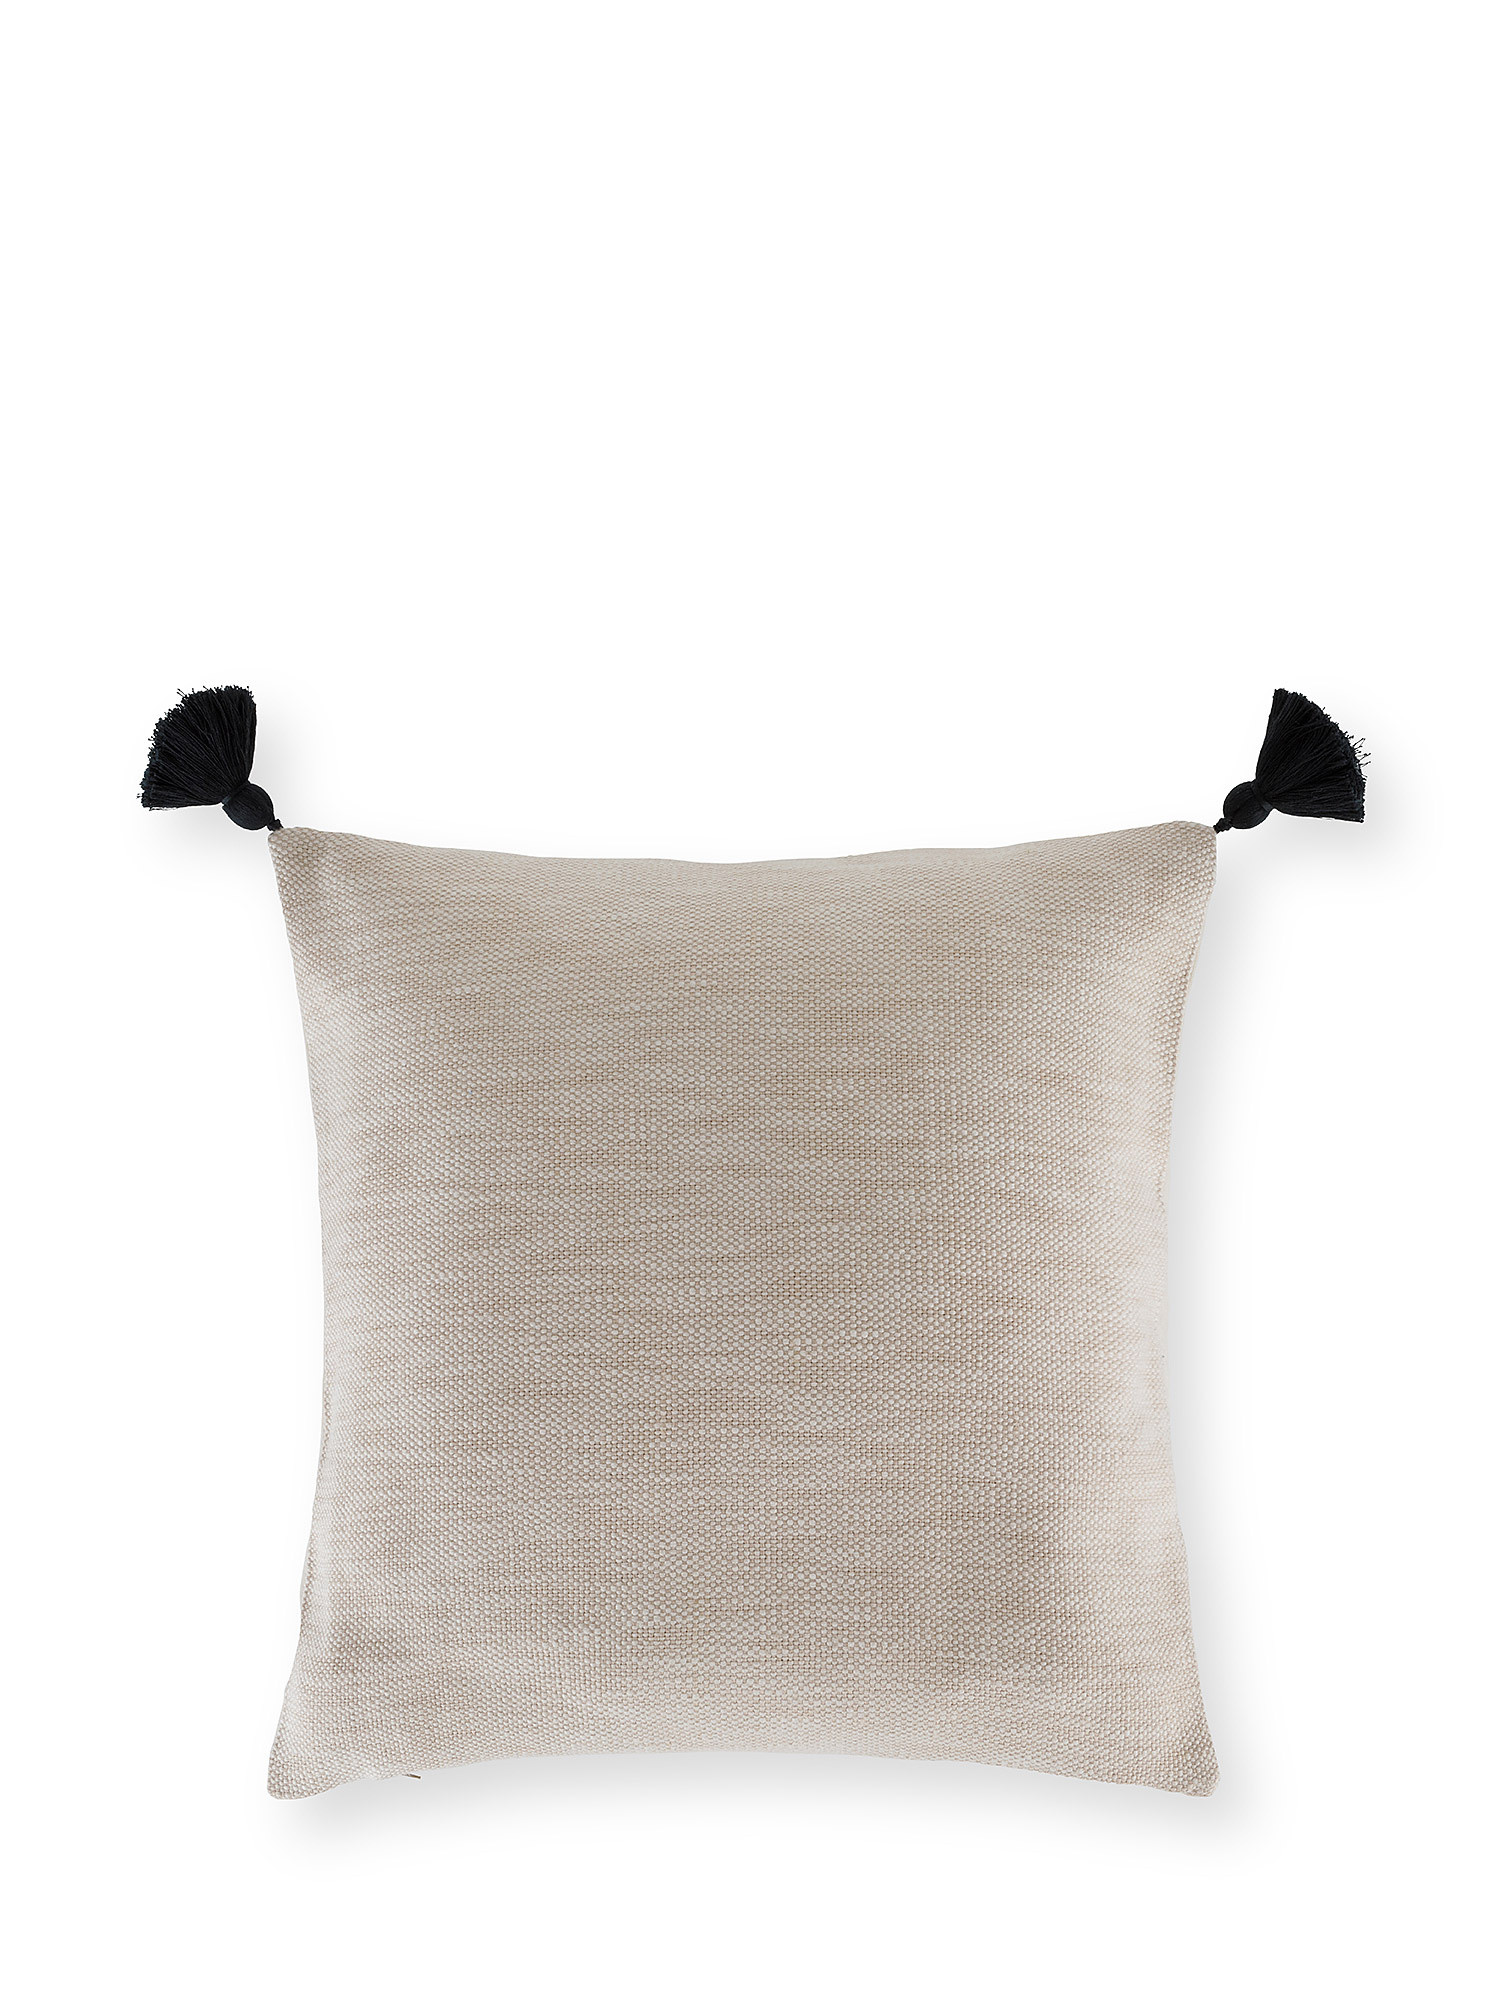 Jacquard cushion with tassel 50x50cm, Beige, large image number 0